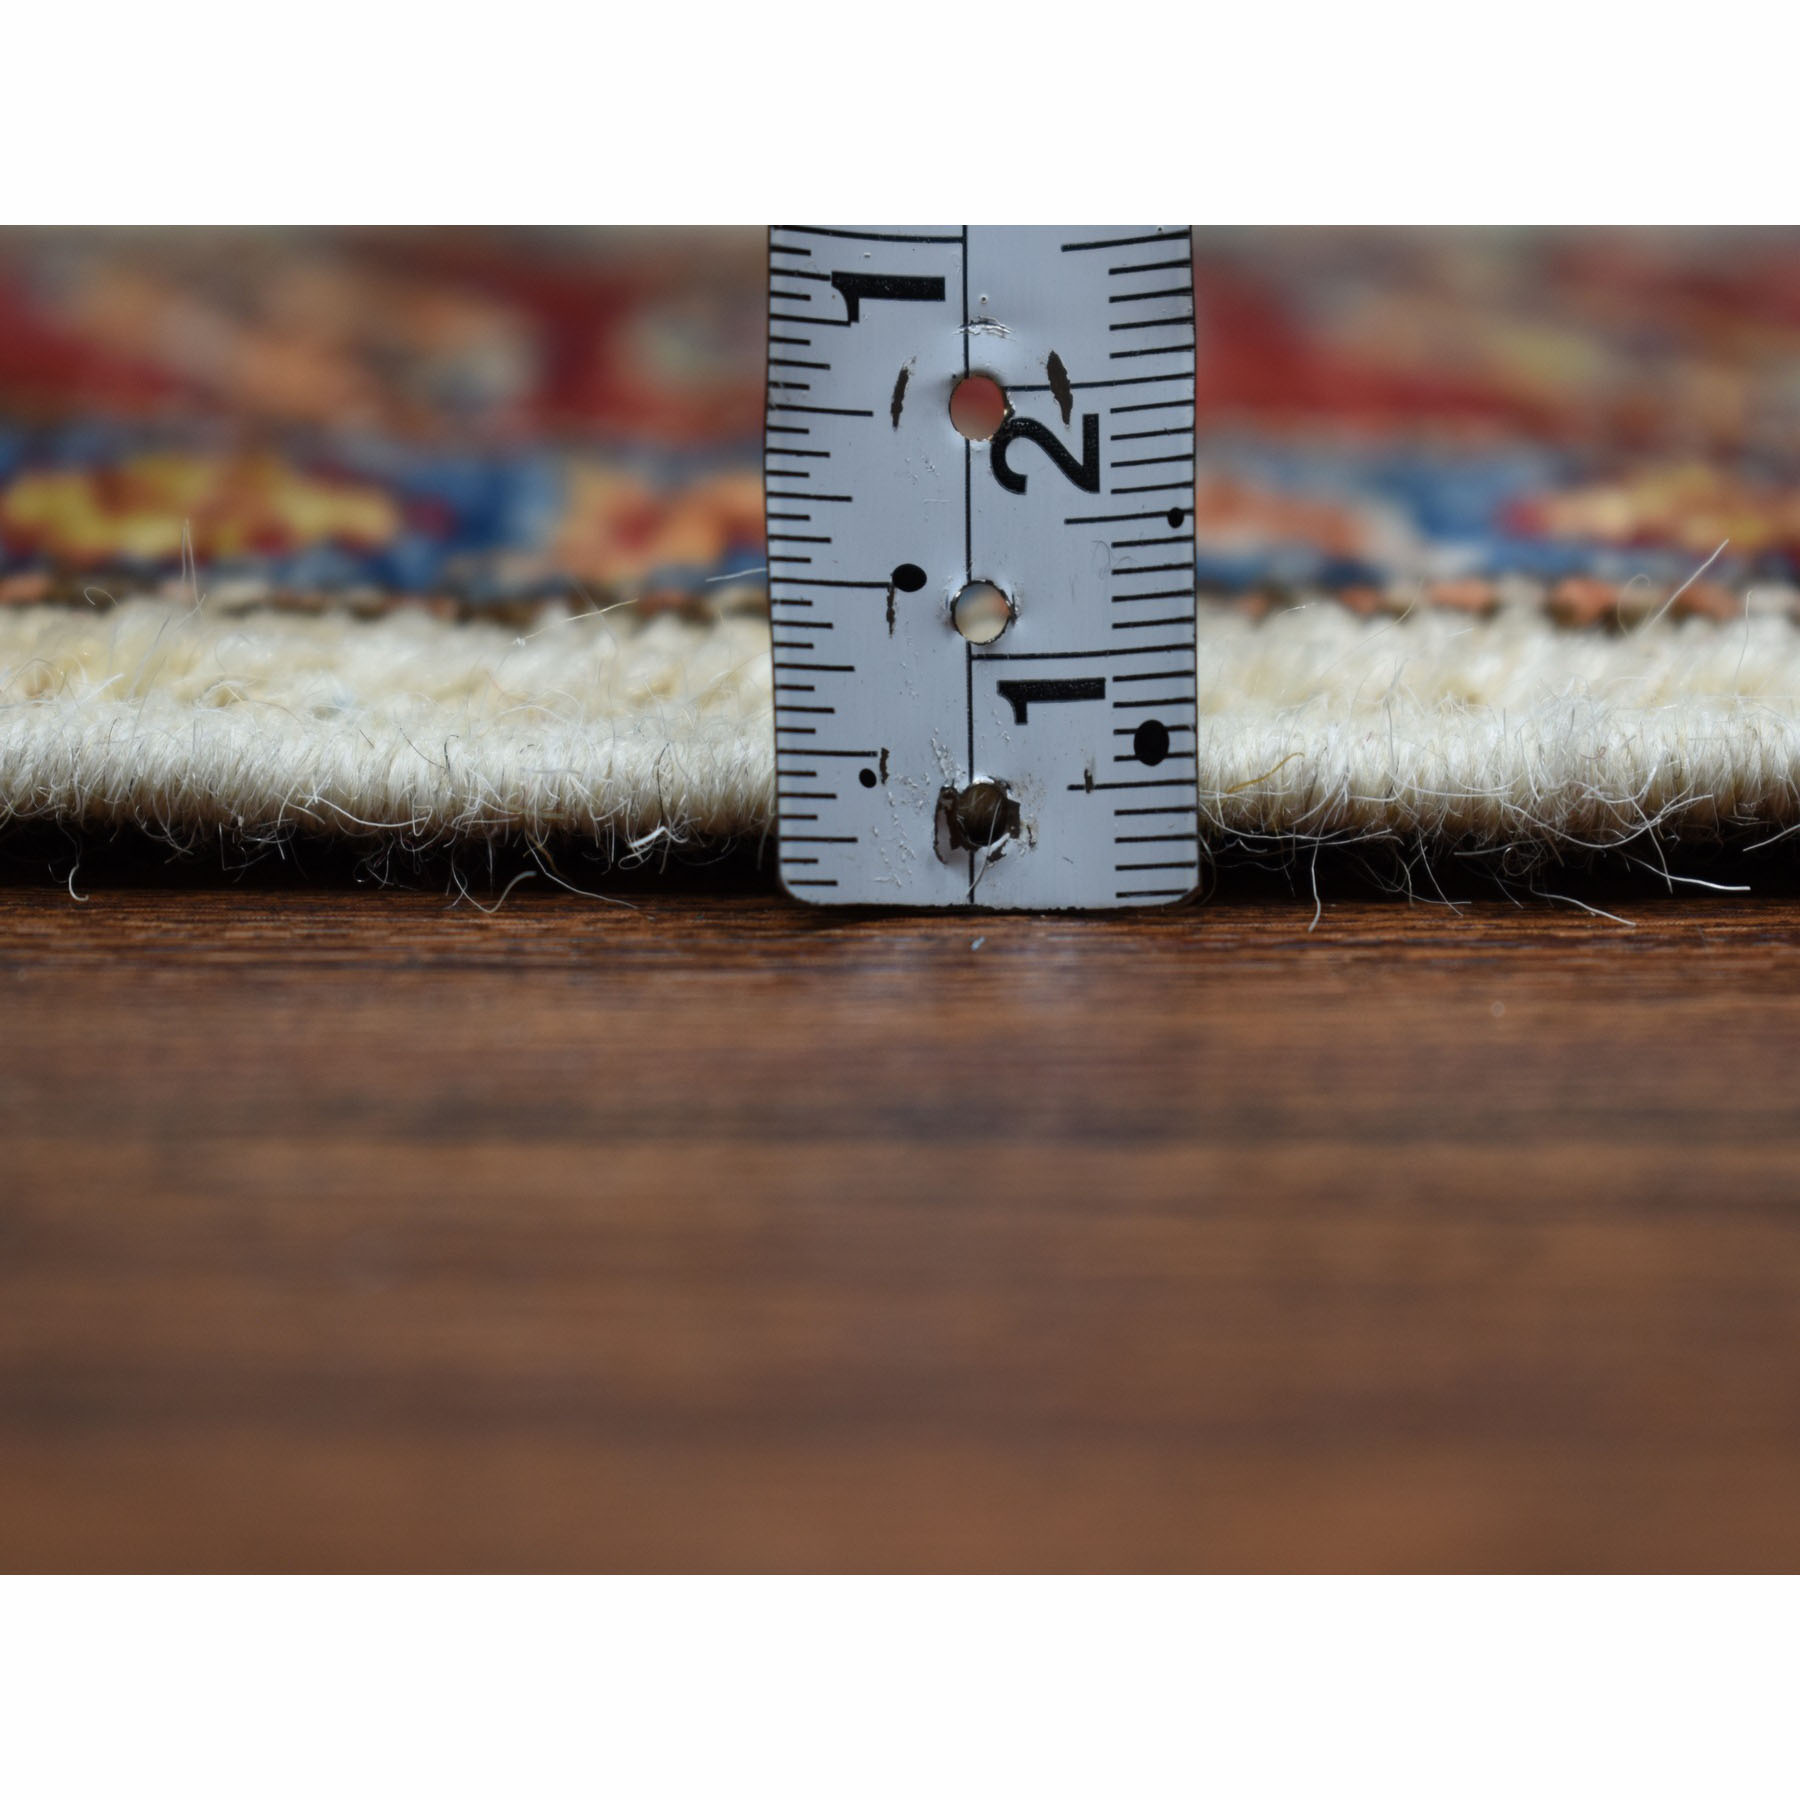 2-x6-3  Ivory Super Kazak Pure Wool Geometric Design Hand-Knotted Oriental Runner Rug 